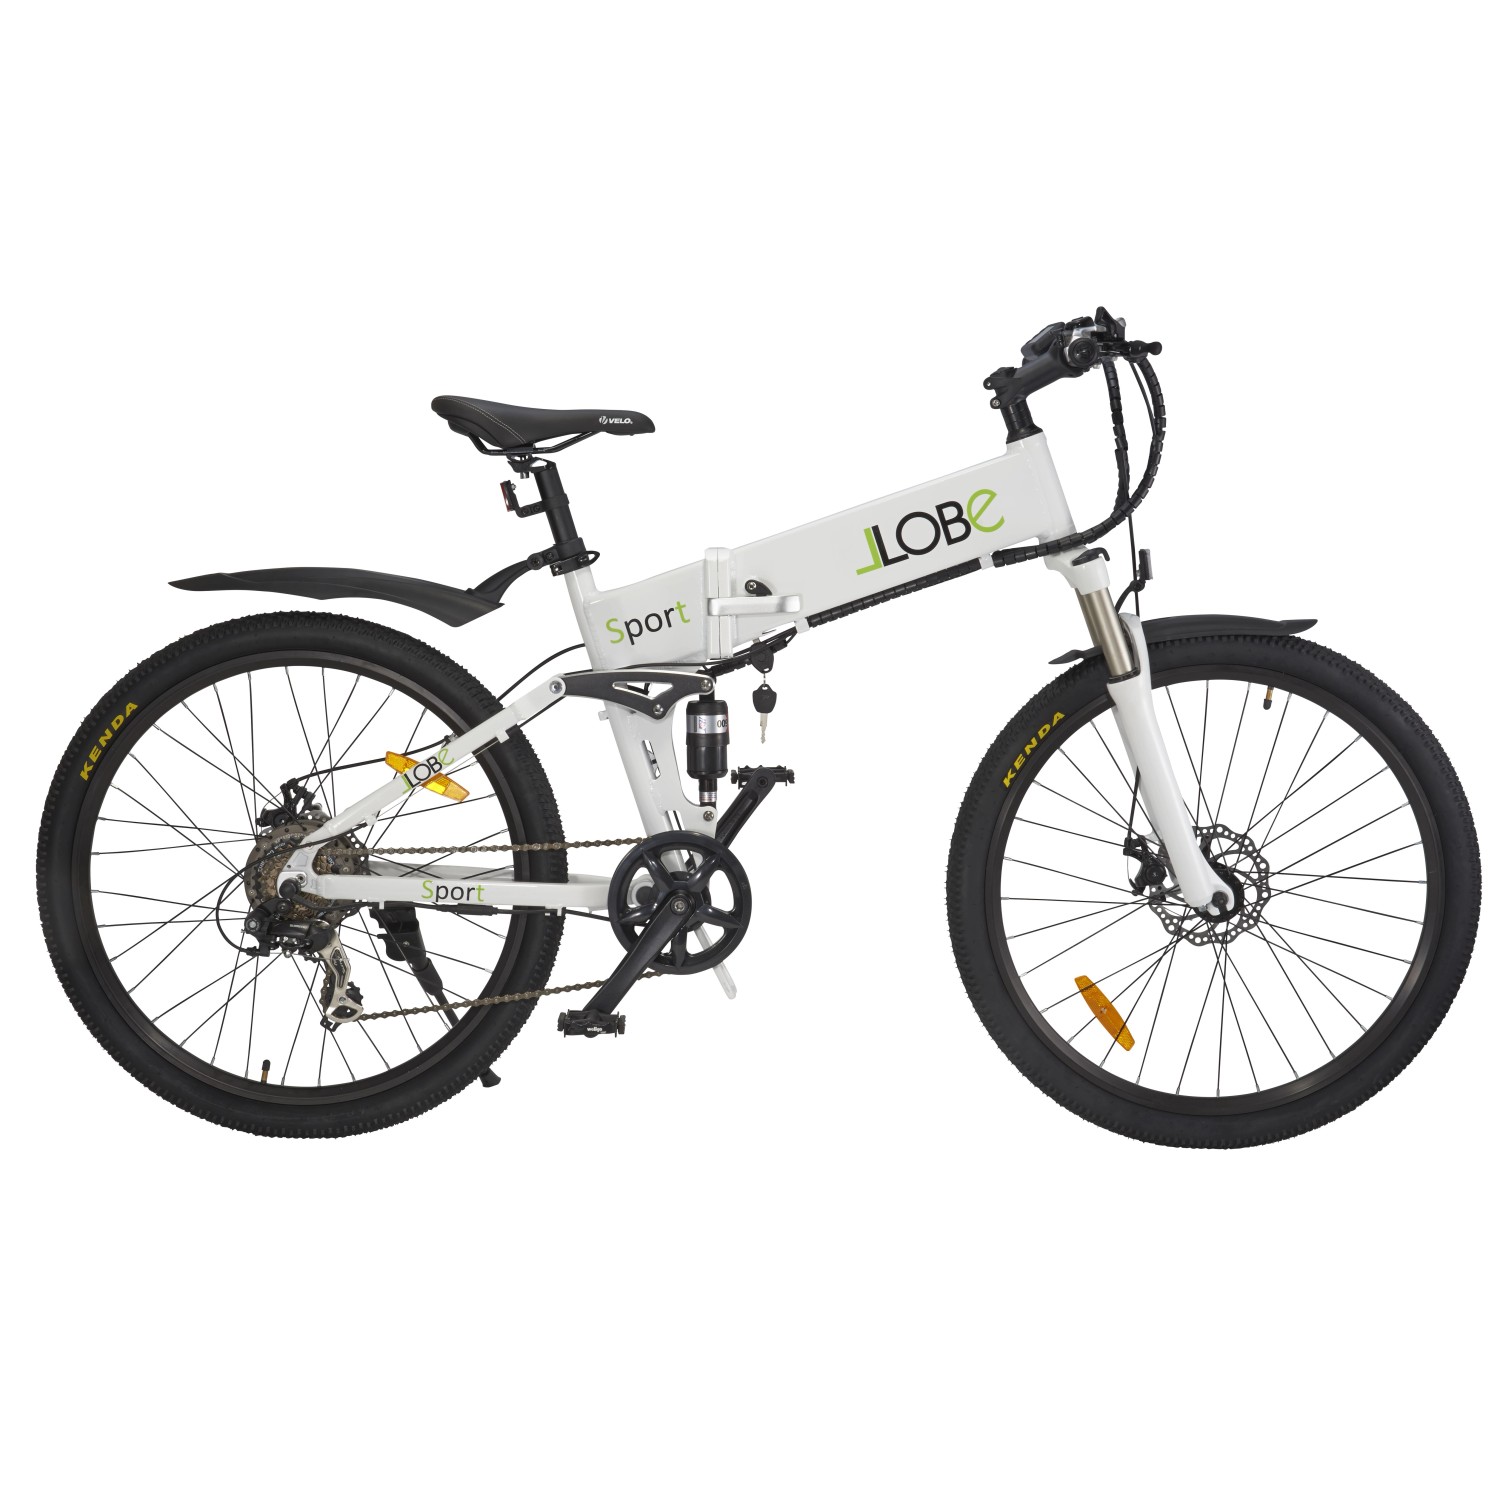 Электровелосипед купить 16. Электровелосипед Qwic. Электровелосипед купить. Hfrypshop rx20 Klapprad e-Bike. Детский e-Bike.